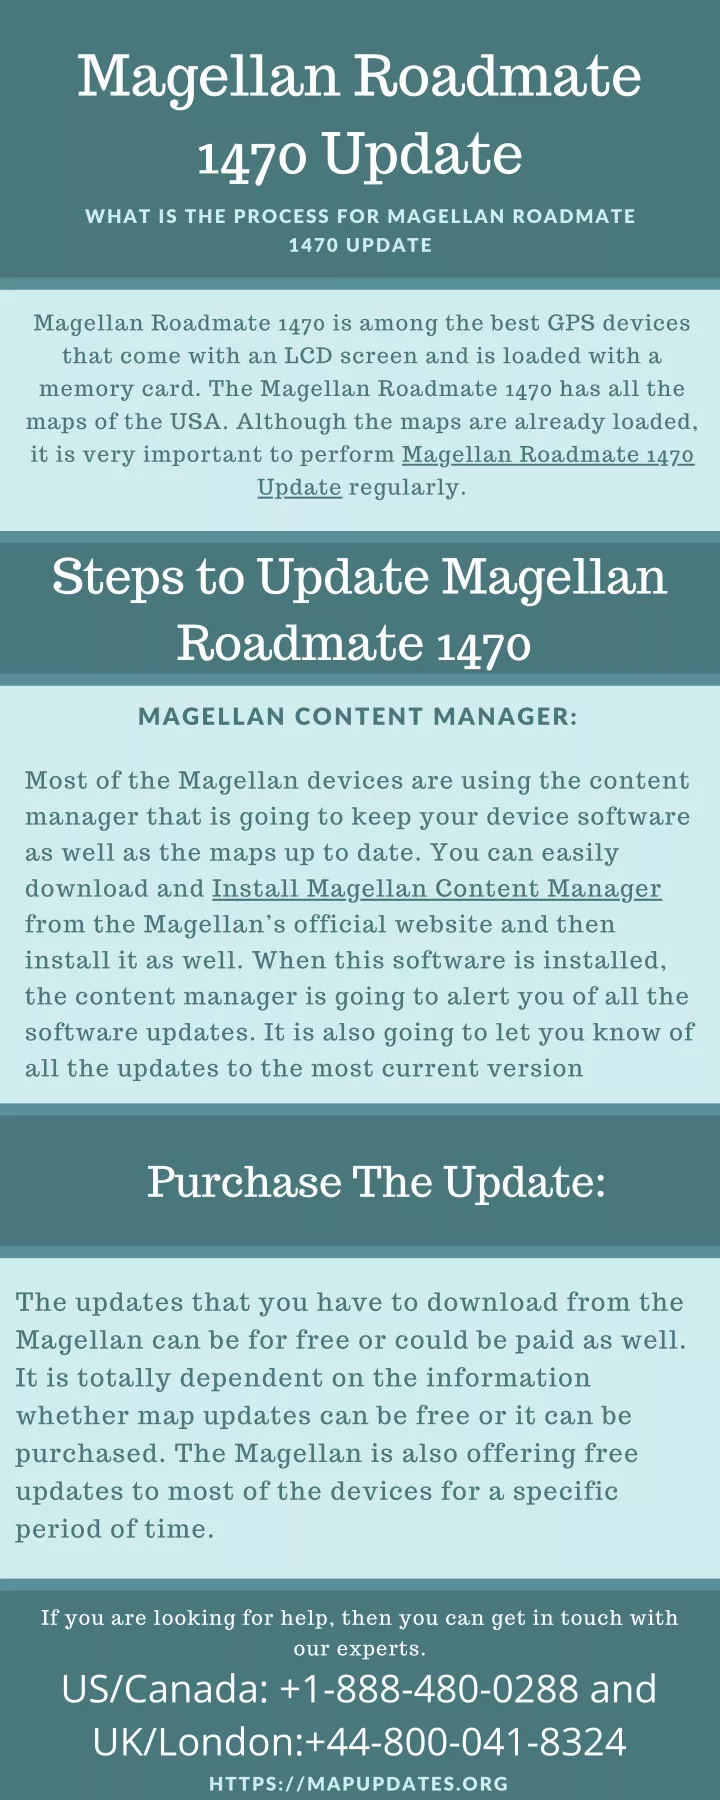 magellan roadmate 1470 update